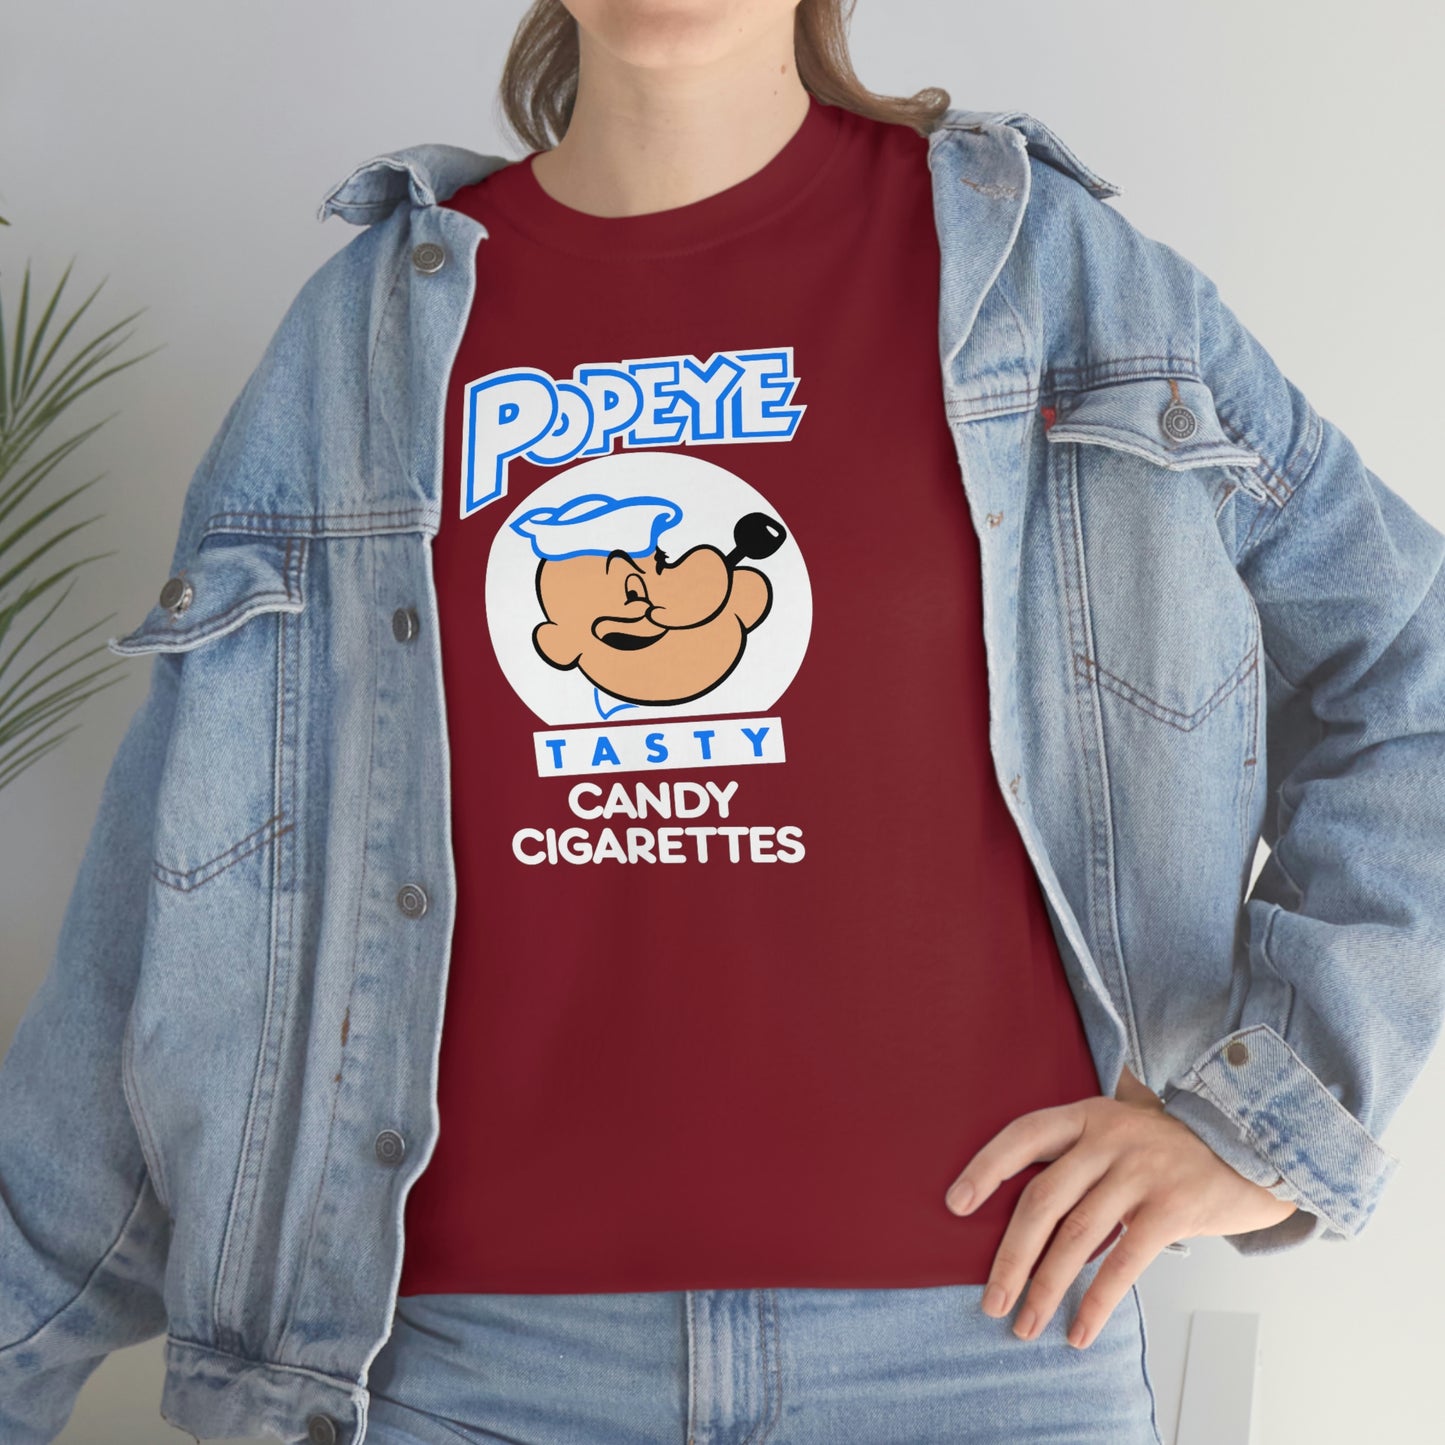 Popeye Candy Cigarettes T-Shirt